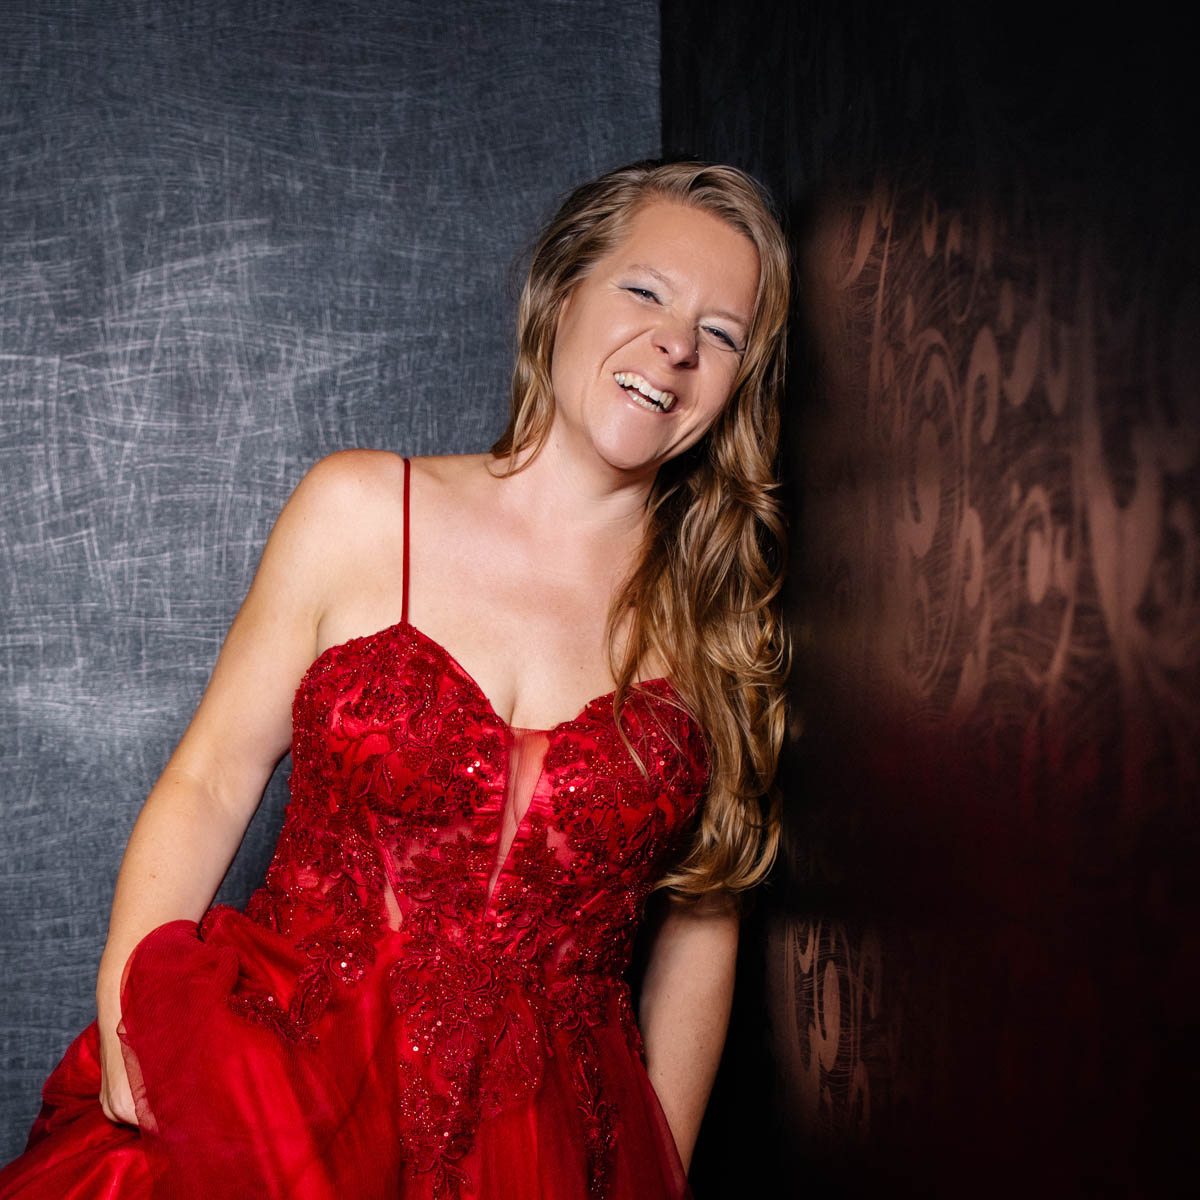 lachende Frau mit roten Kleid im Fotostudio :: photo copyright Karin Bergmann